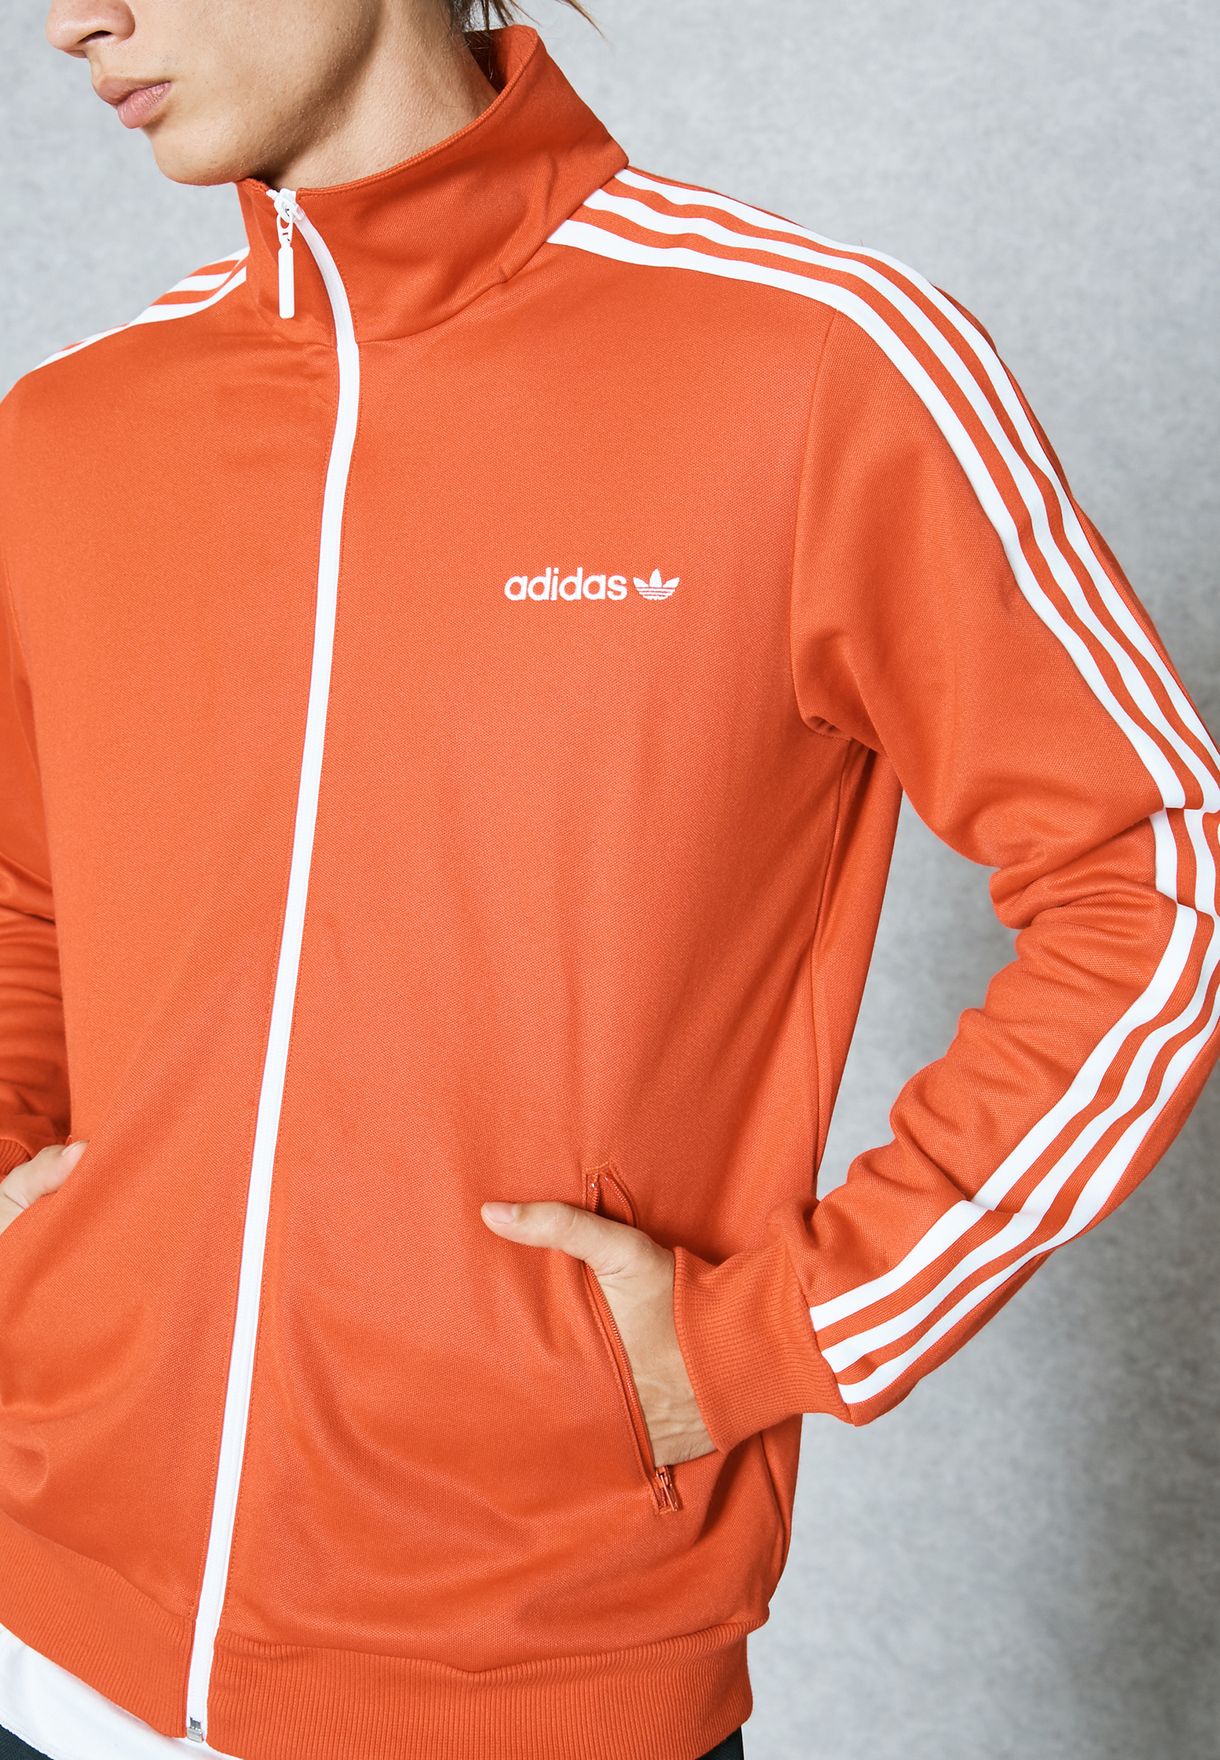 adidas bb track jacket red